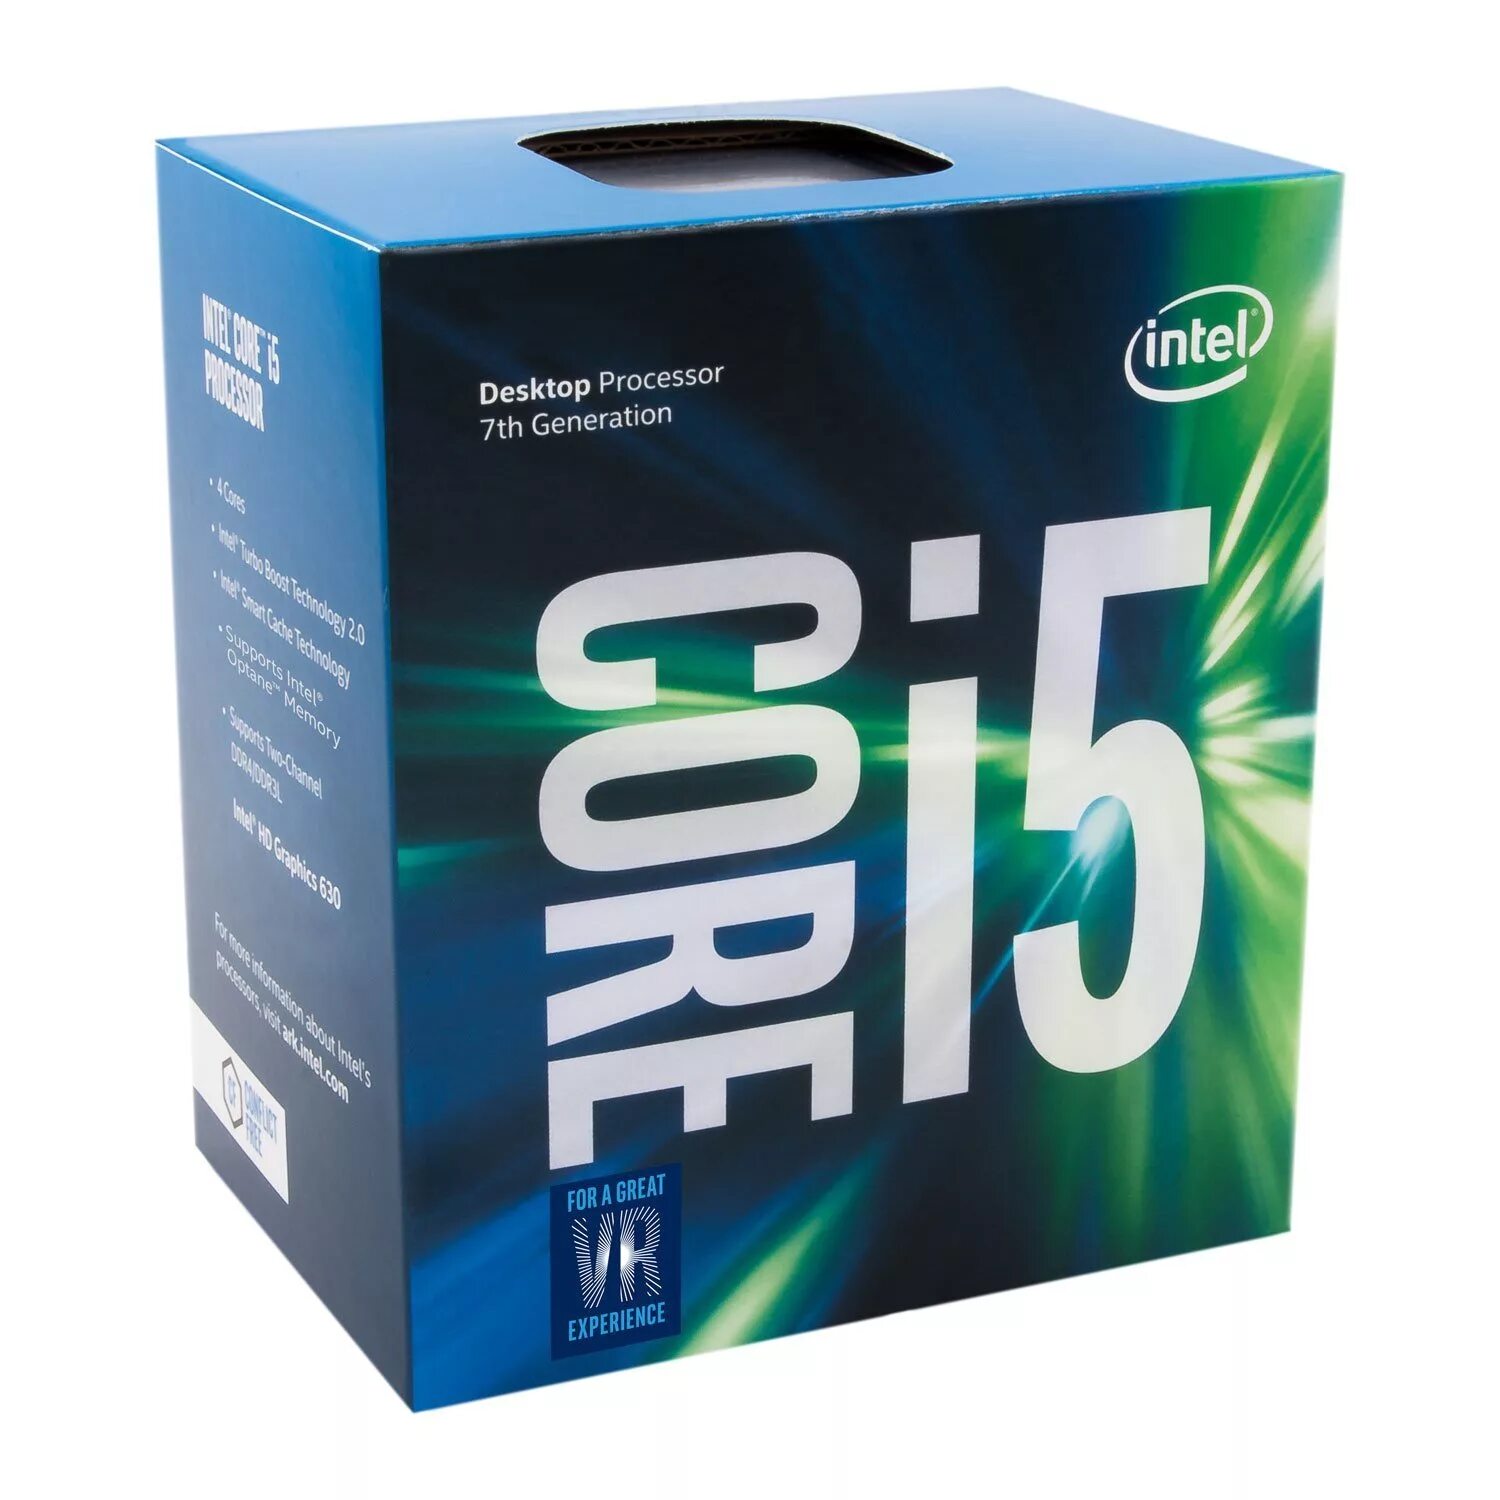 Inter i5. Процессор Intel Core i3-7100. Intel Core i5-7400. Процессор Intel Core i5-7600. Процессор Intel Core i5-7400t.